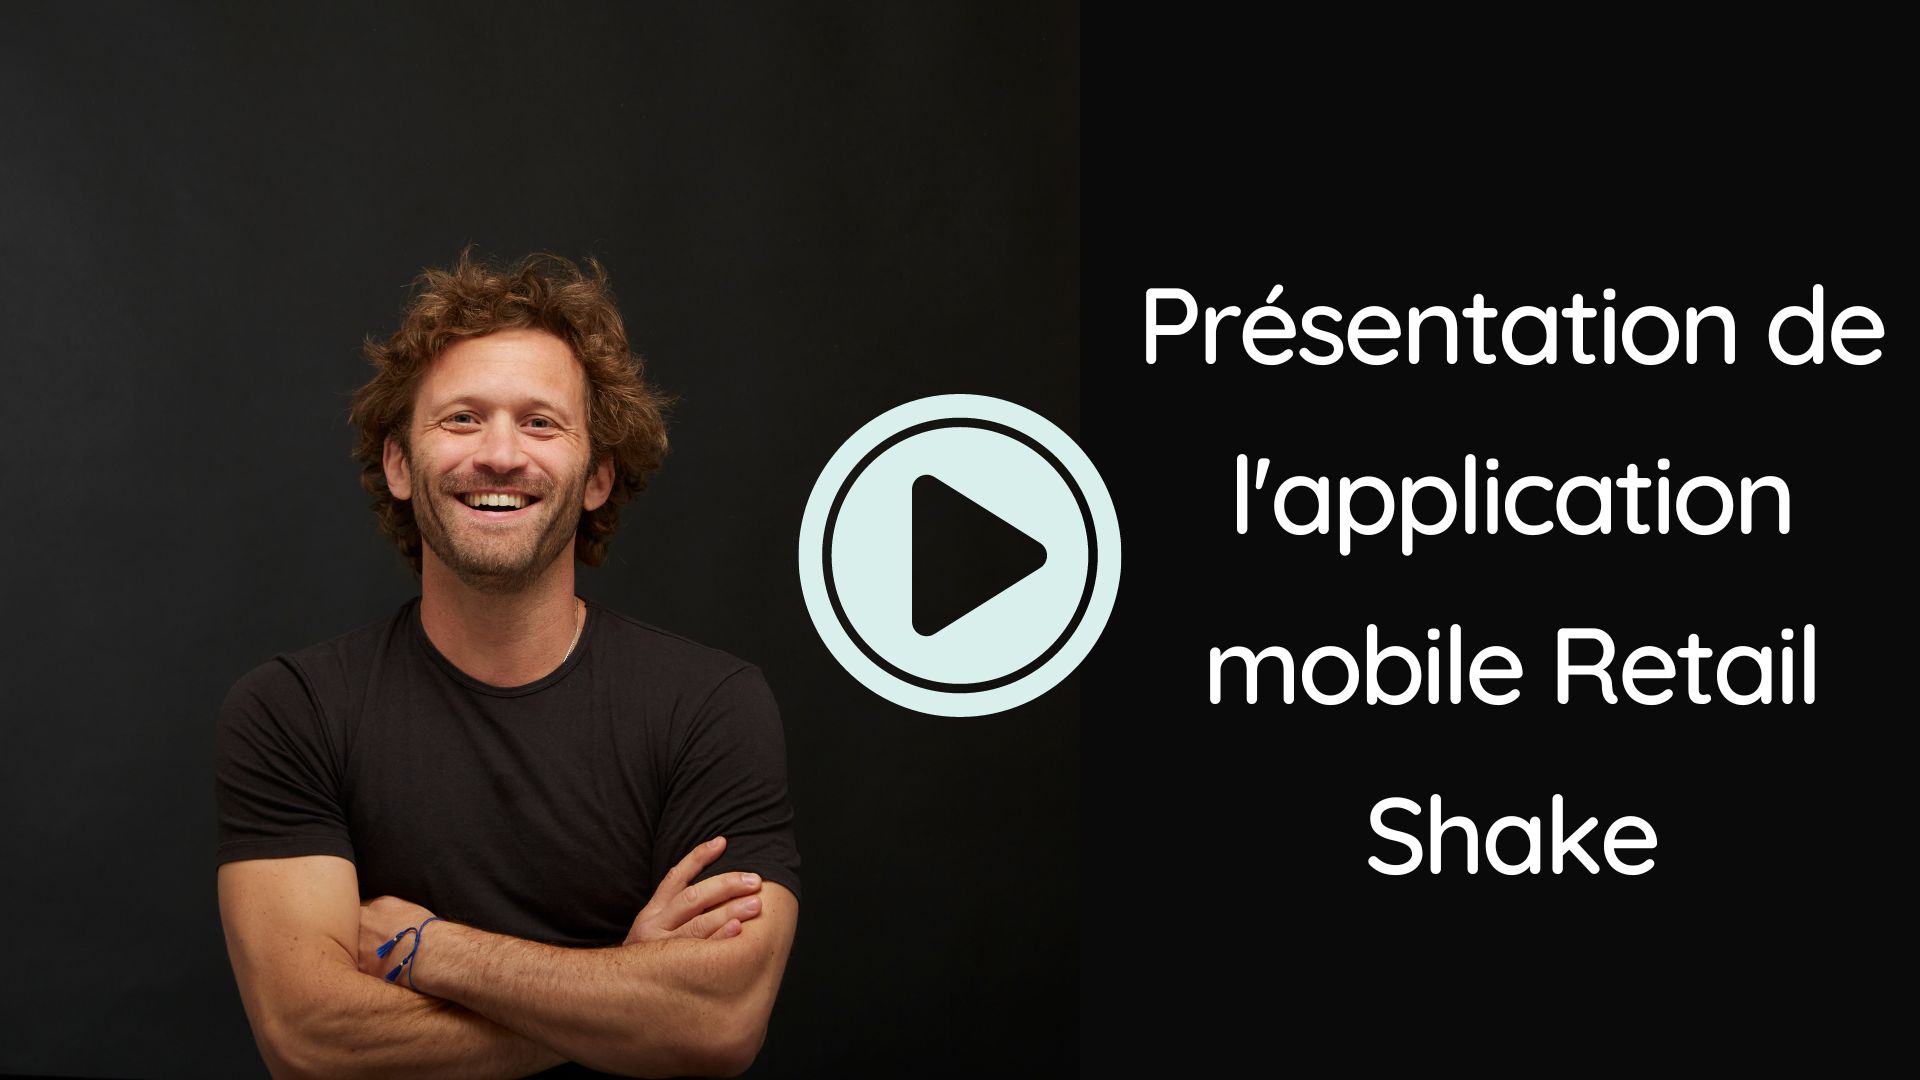 Retail shake academy : présentation de l'application mobile retail shake 